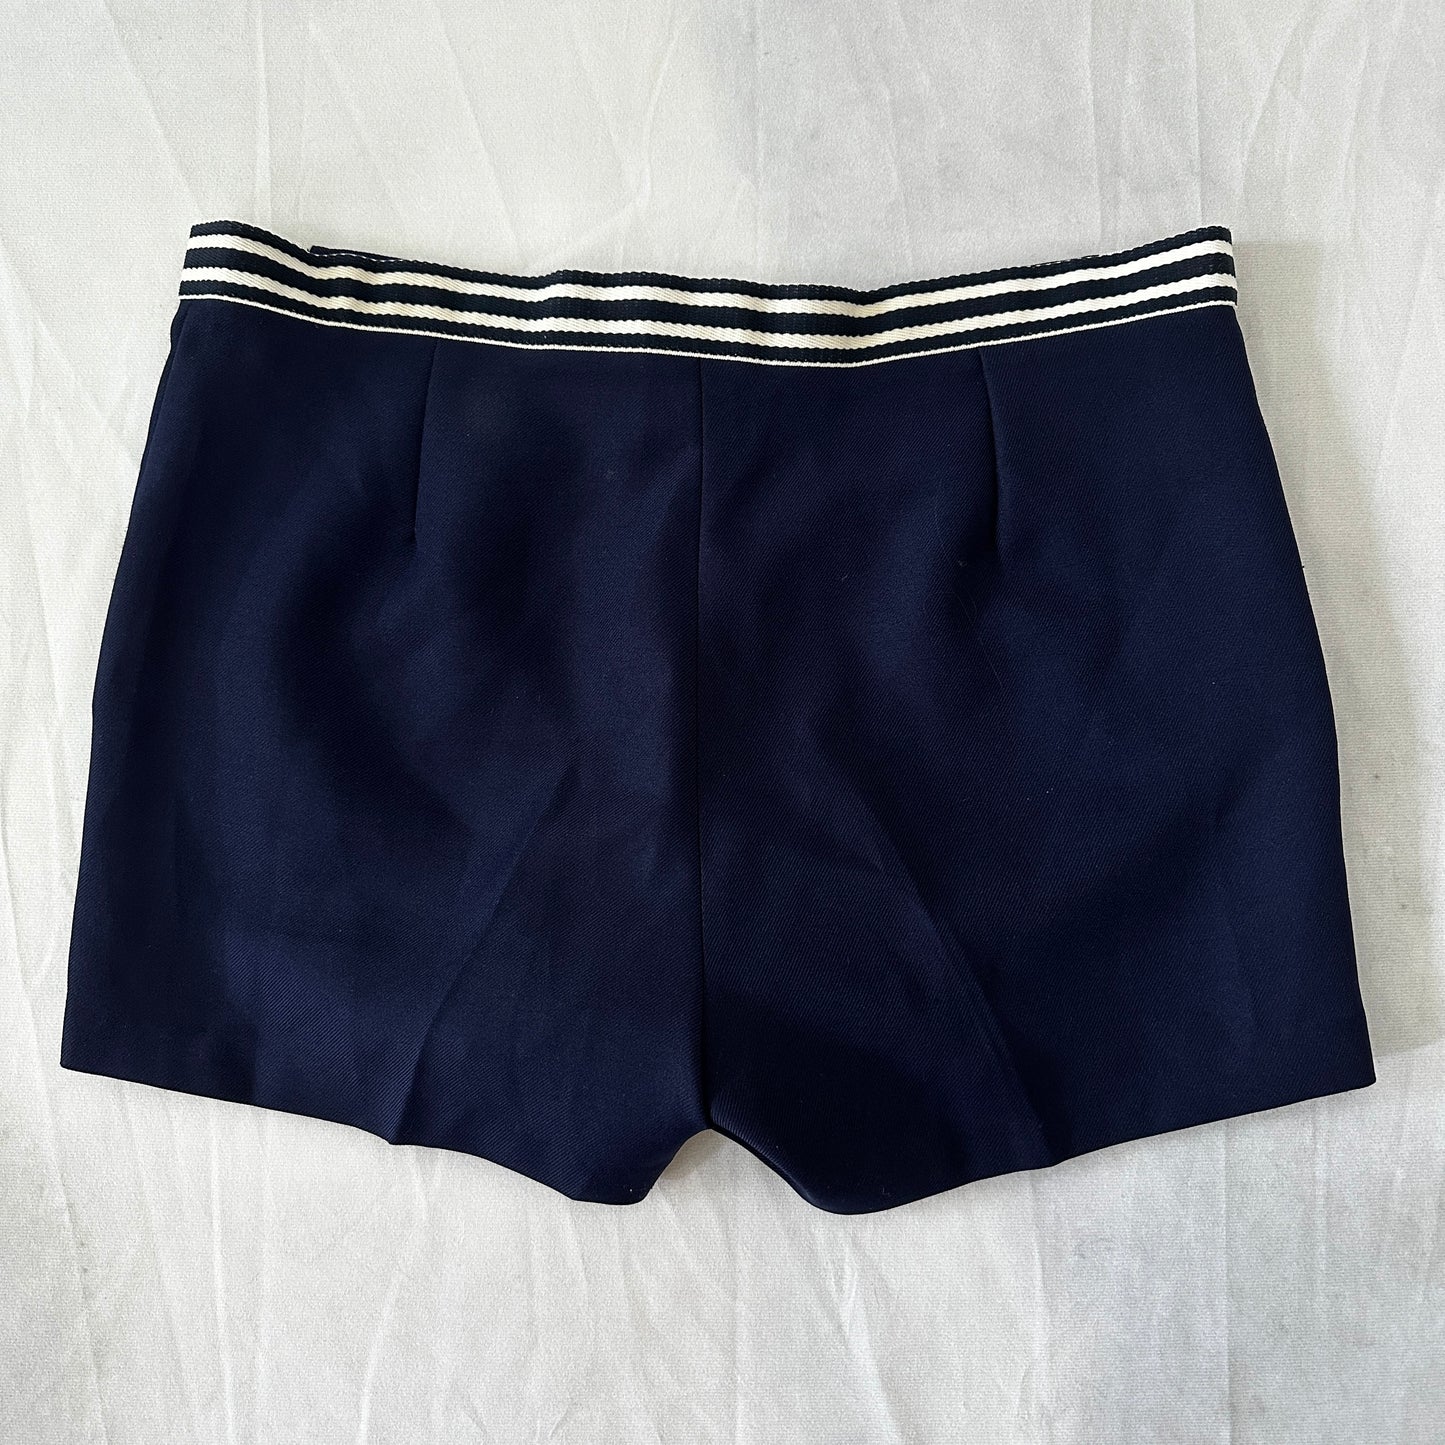 80s Vintage Tennis Shorts - Navy - M